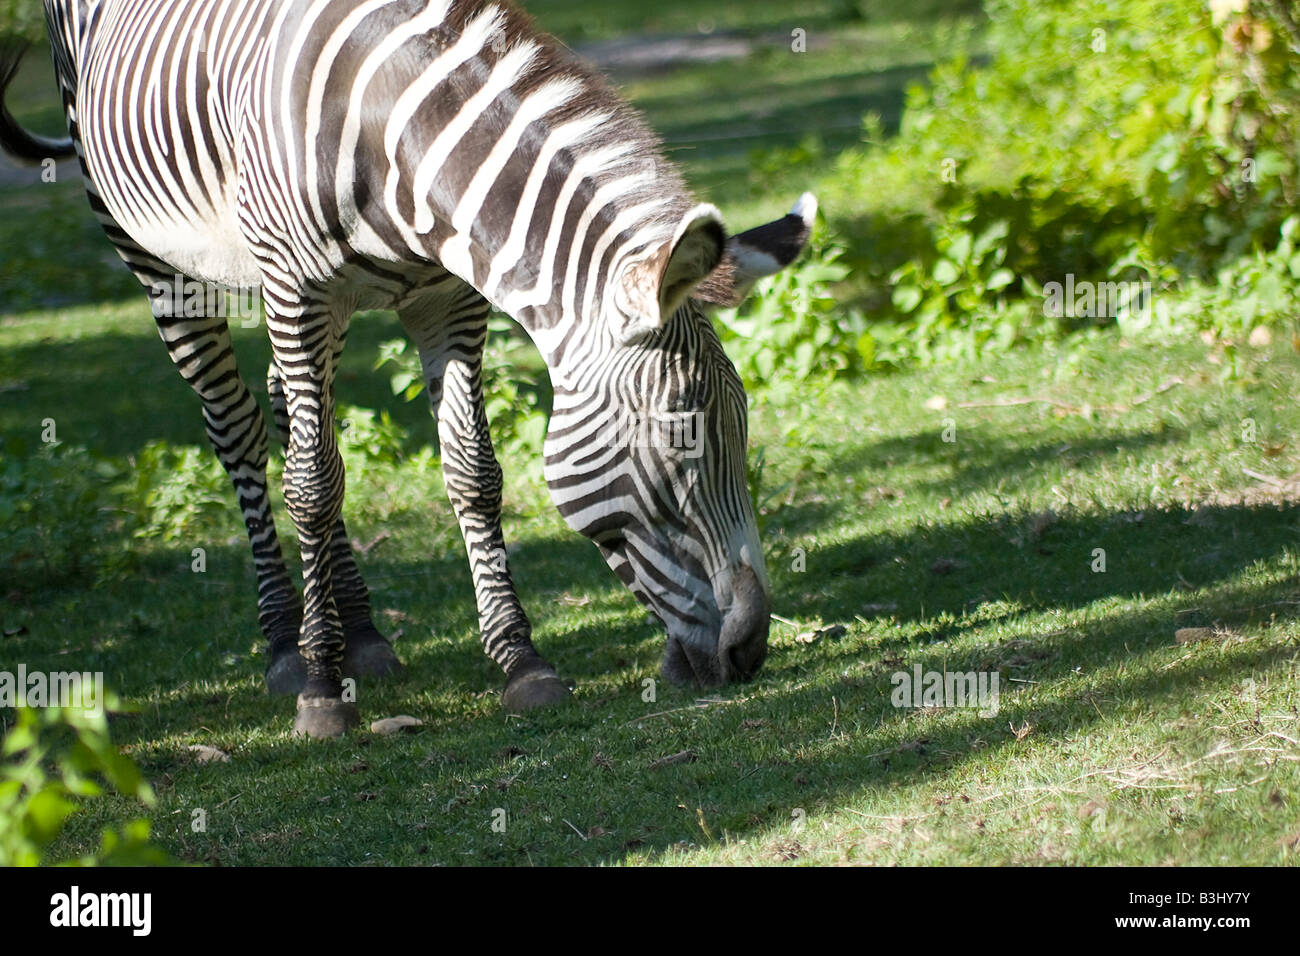 A zebra grazing on the green grass Stock Photo